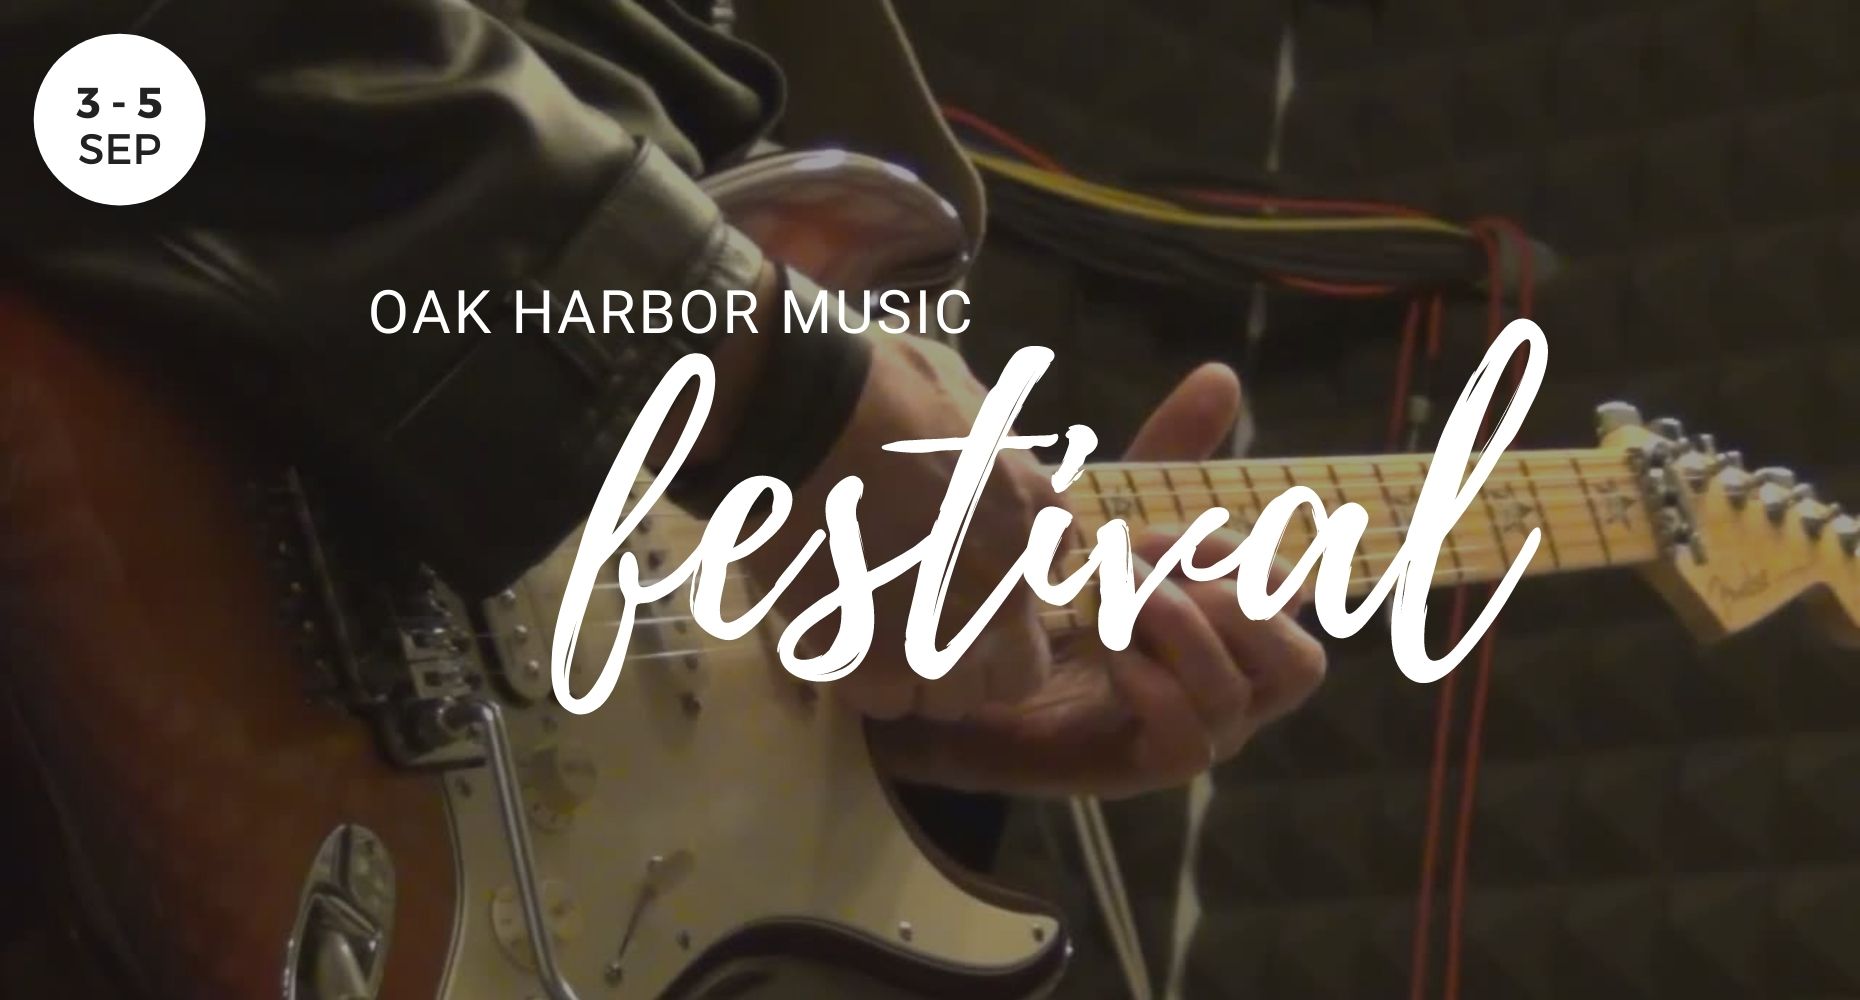 Oak Harbor Music Festival, Events, Whidbey Island, Washington